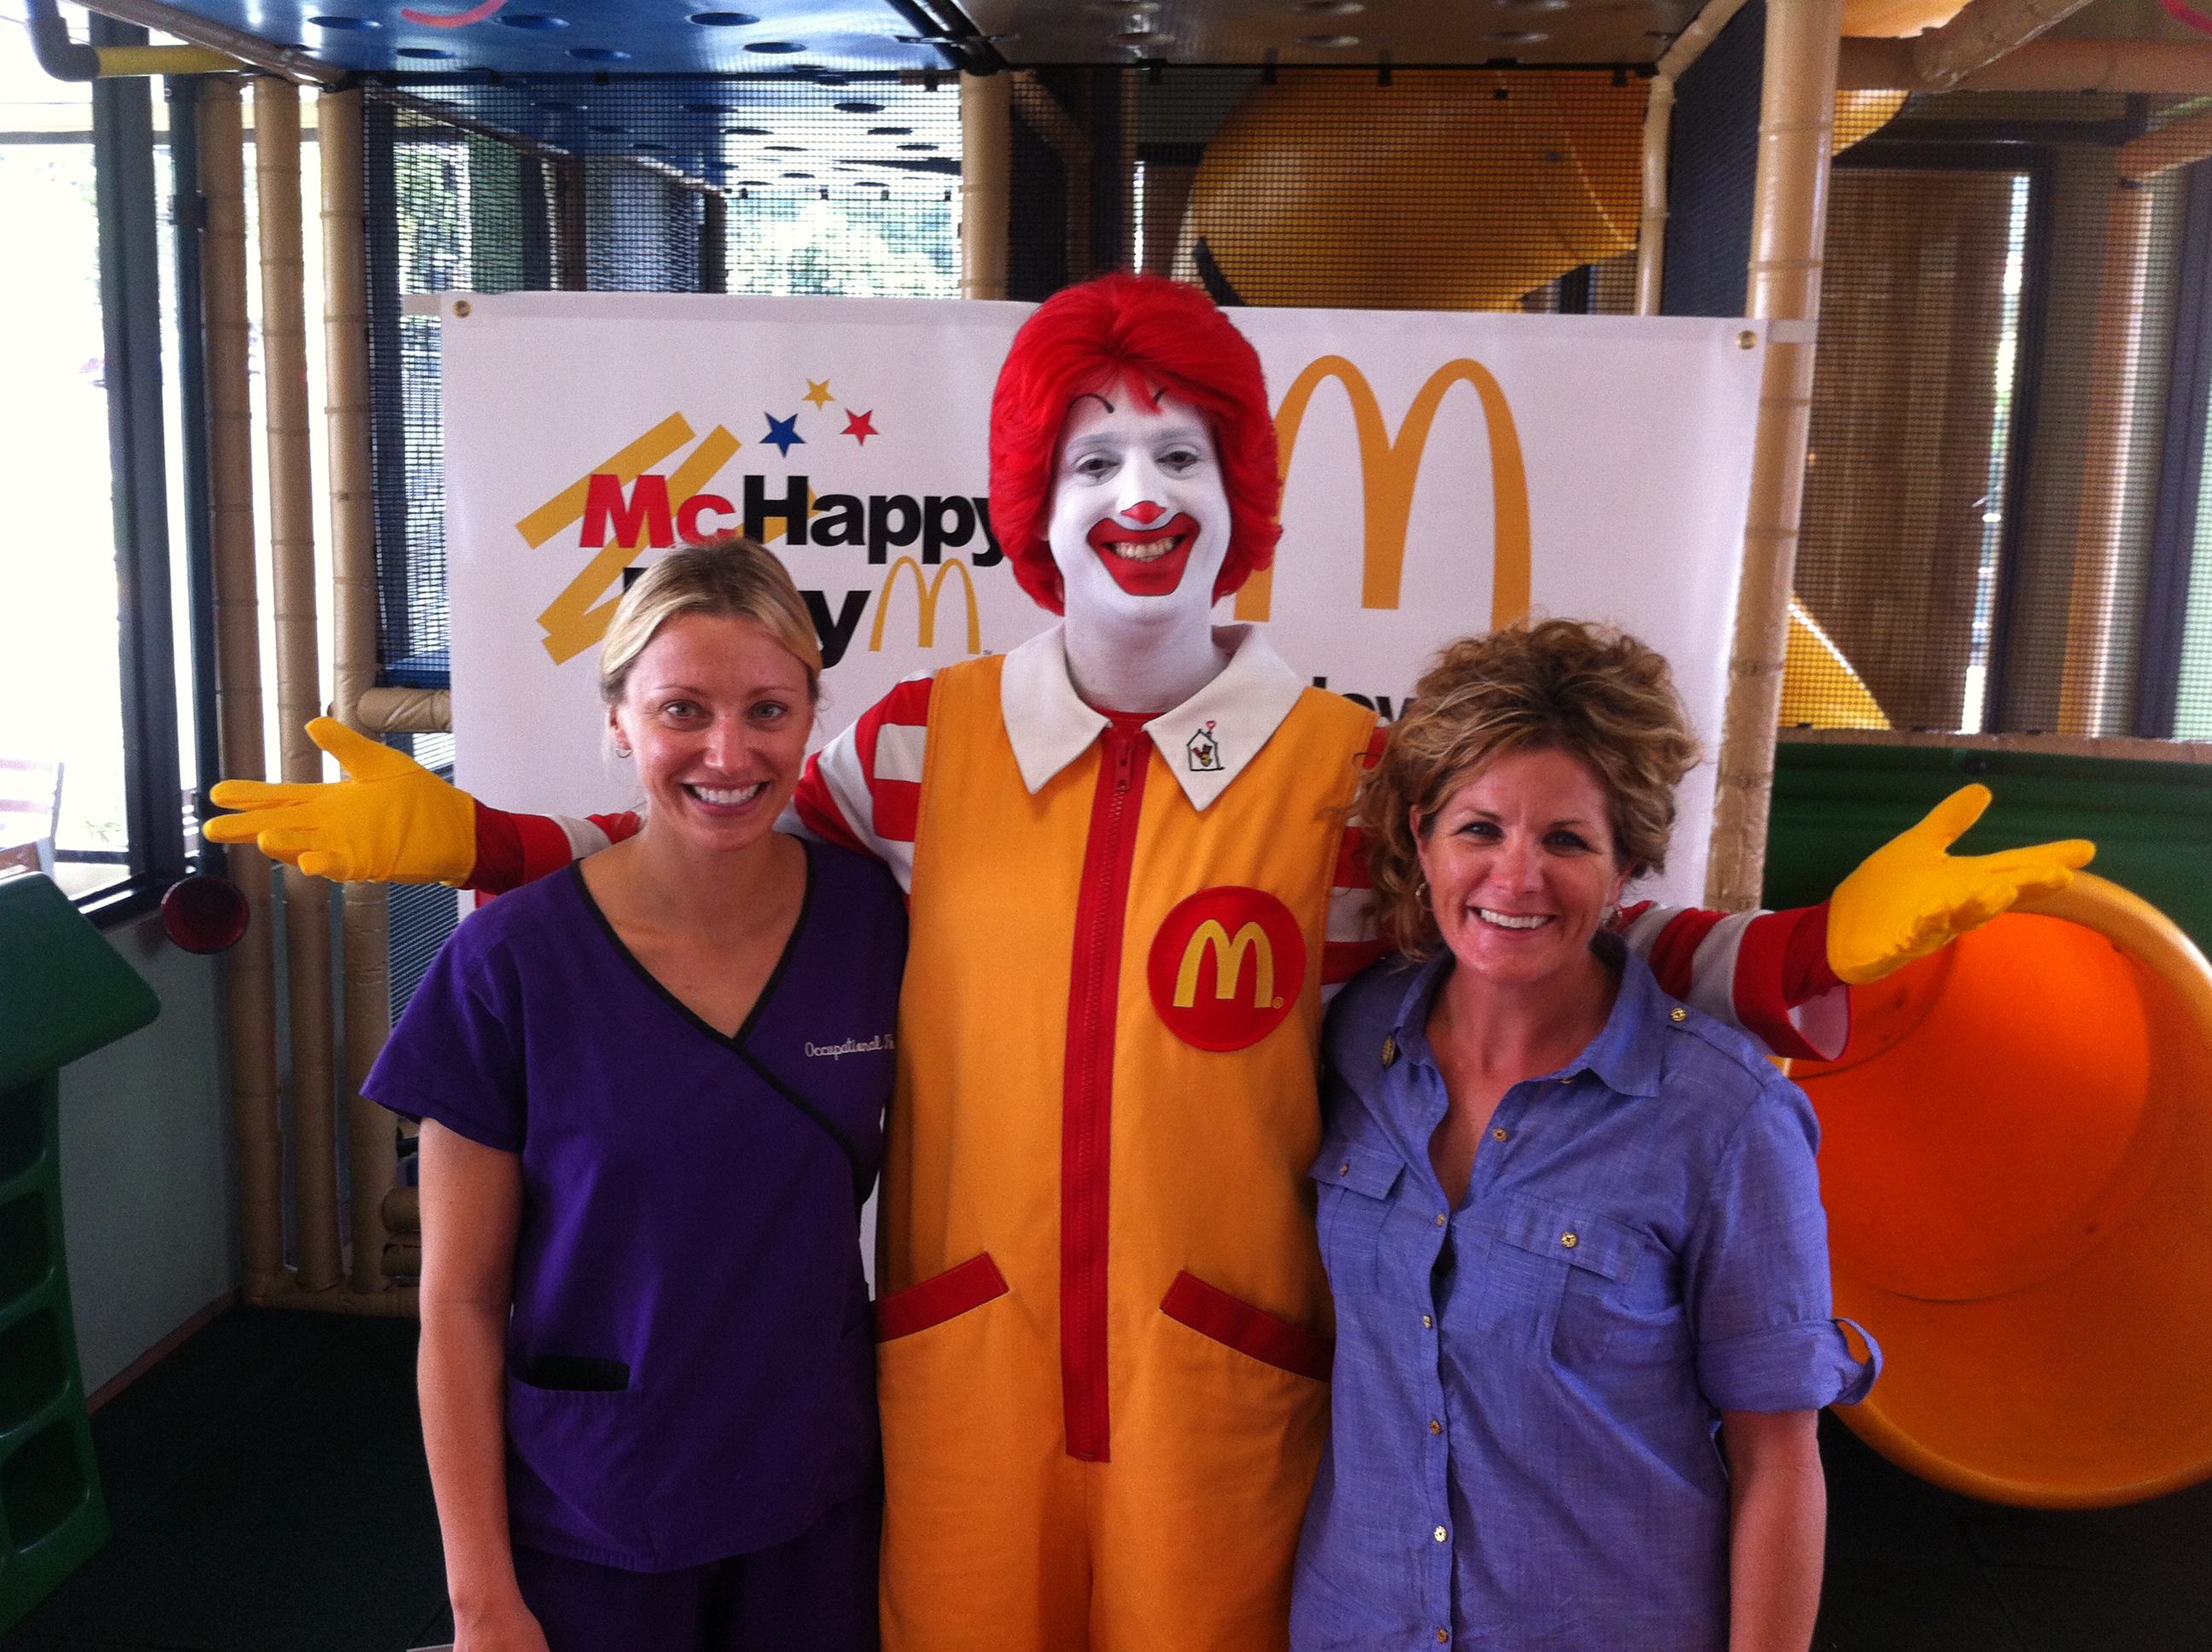 Ronald McDonald Kicks Off McHappy Day